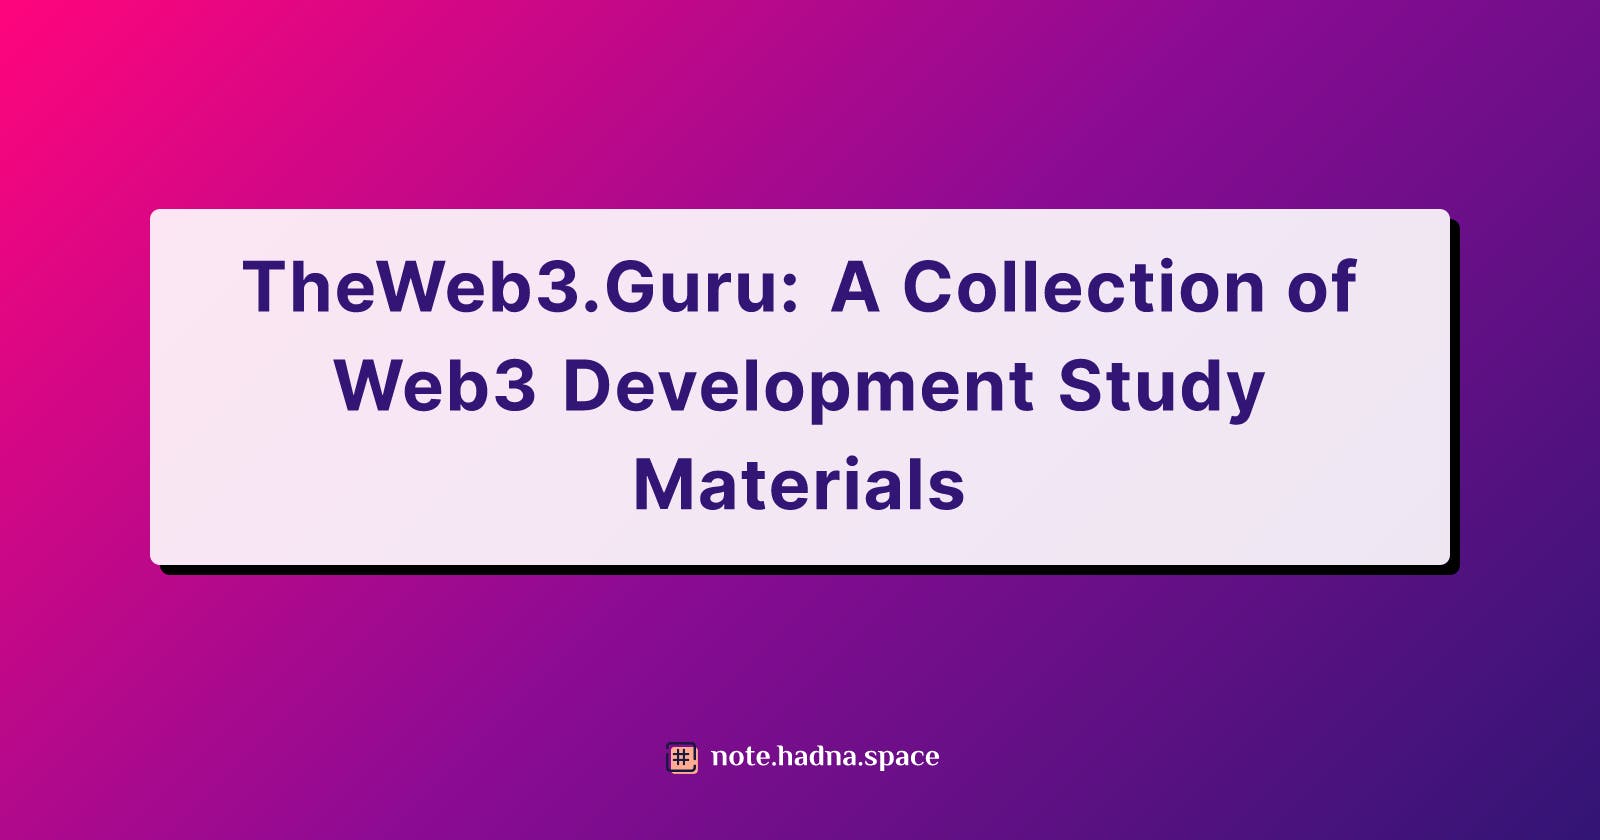 TheWeb3.Guru: A Collection of Web3 Development Study Materials